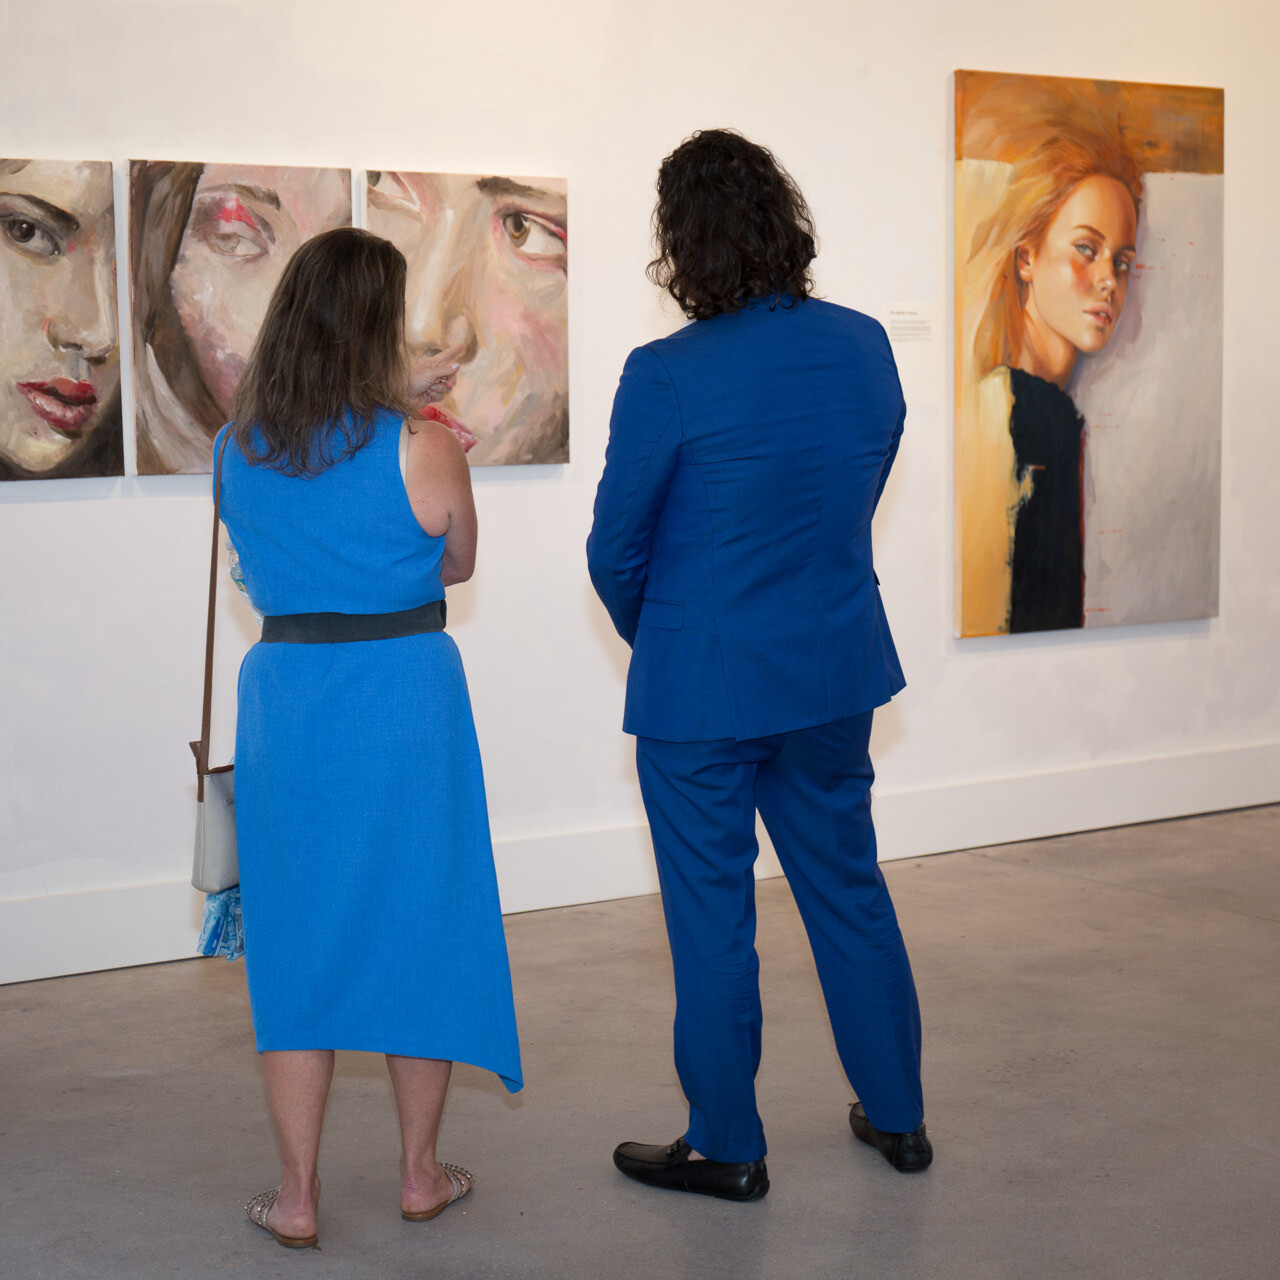 Artist Alex in a blue suit in conversation with art historian Luciane R. N. Garcez at an art exhibition